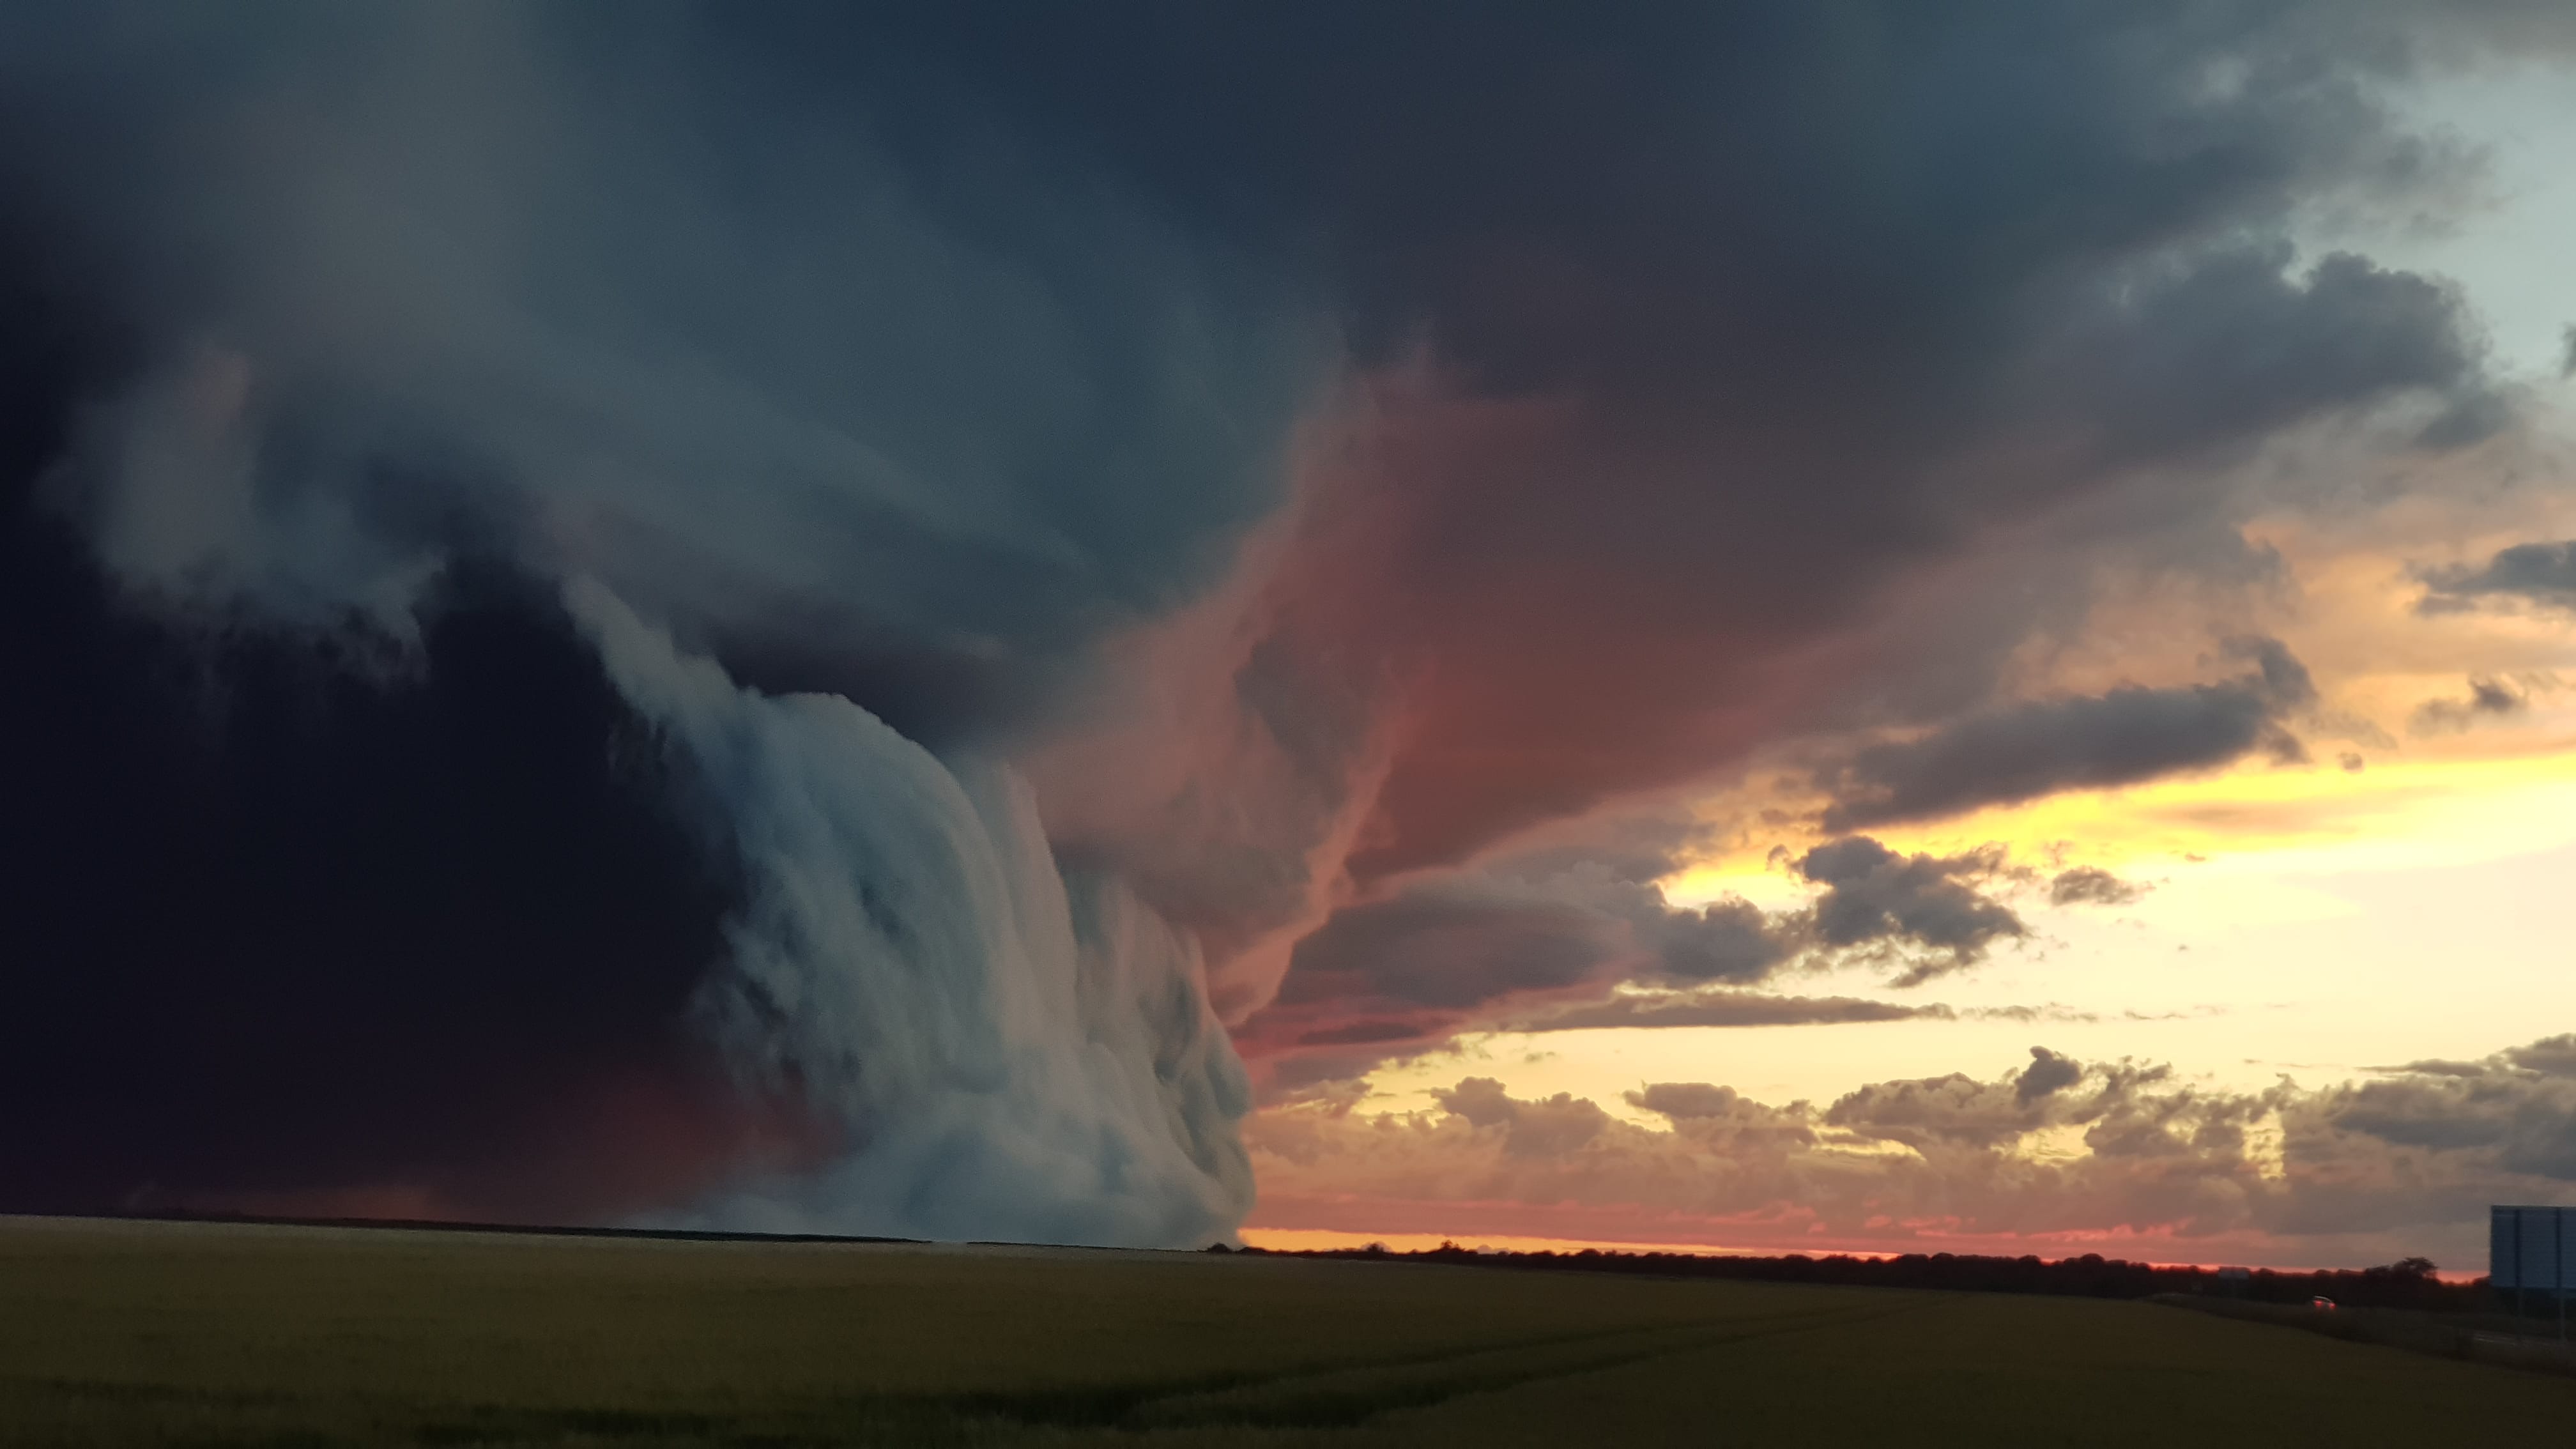 Cellule orageuse avec un rideau de nuages au raz du sol - 12/06/2020 22:00 - José O. DA SILVA